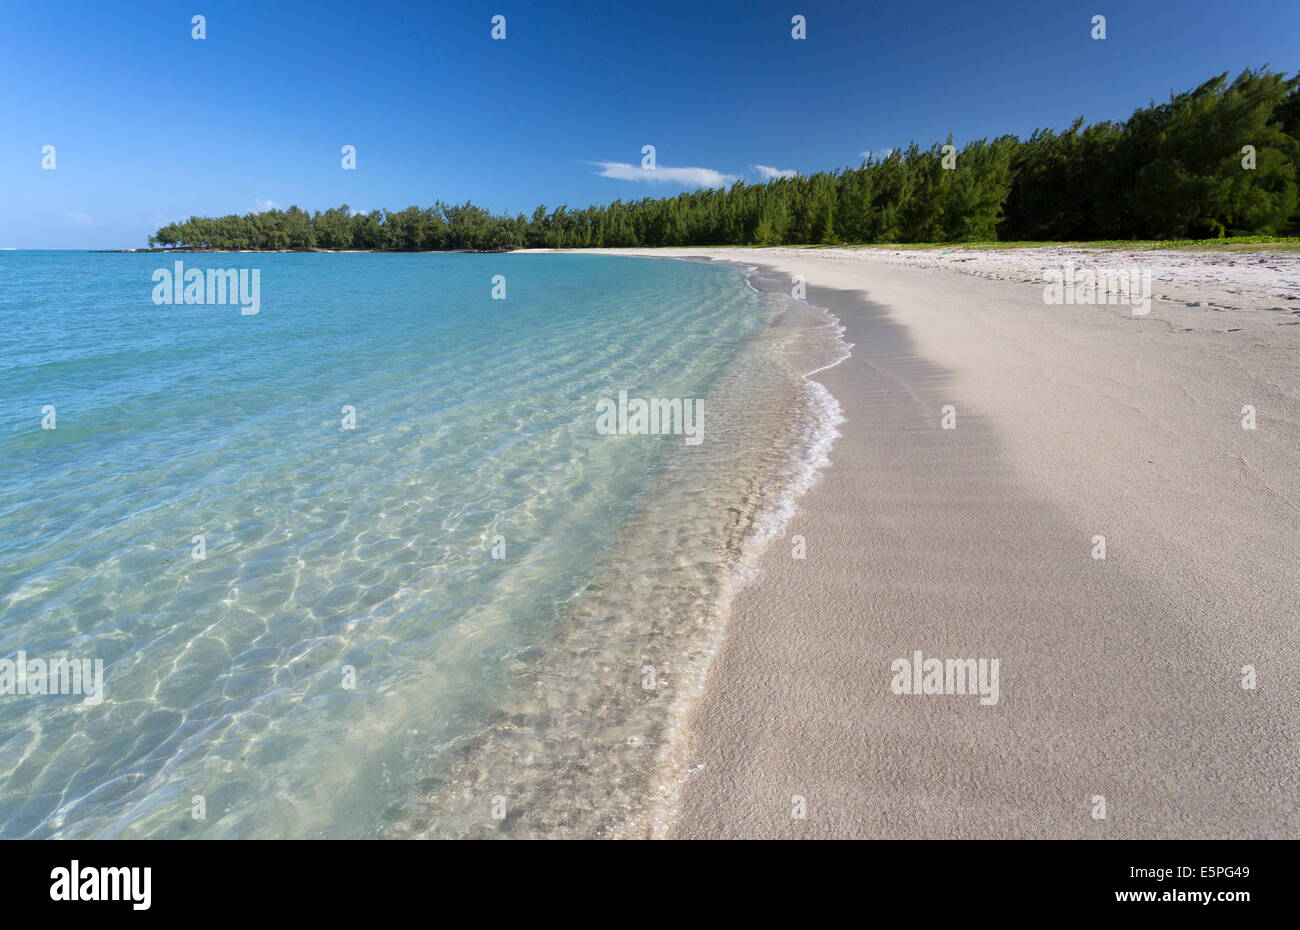 Idyllic beach scene with blue sky, aquamarine sea and soft sand, Ile Aux Cerfs, Mauritius, Indian Ocean, Africa Stock Photo